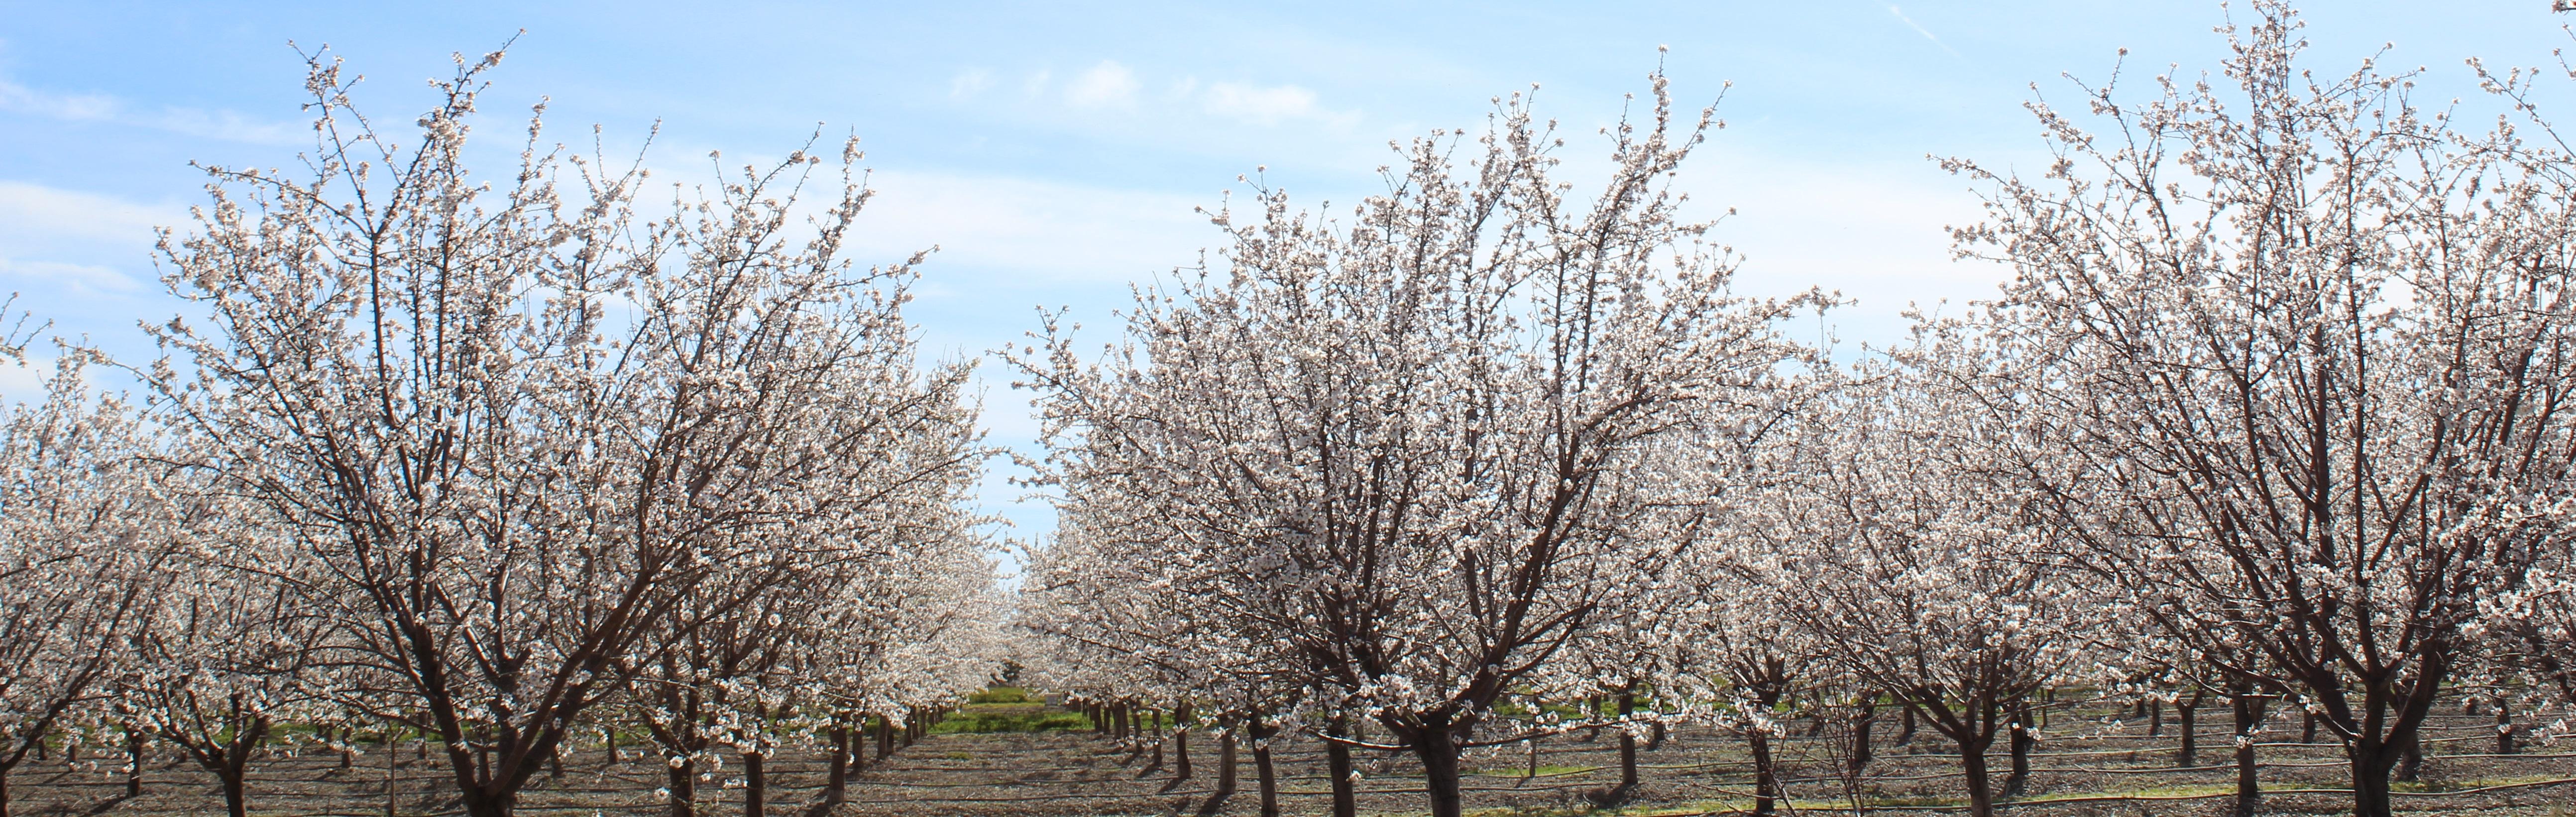 Almond Blossoms Photo